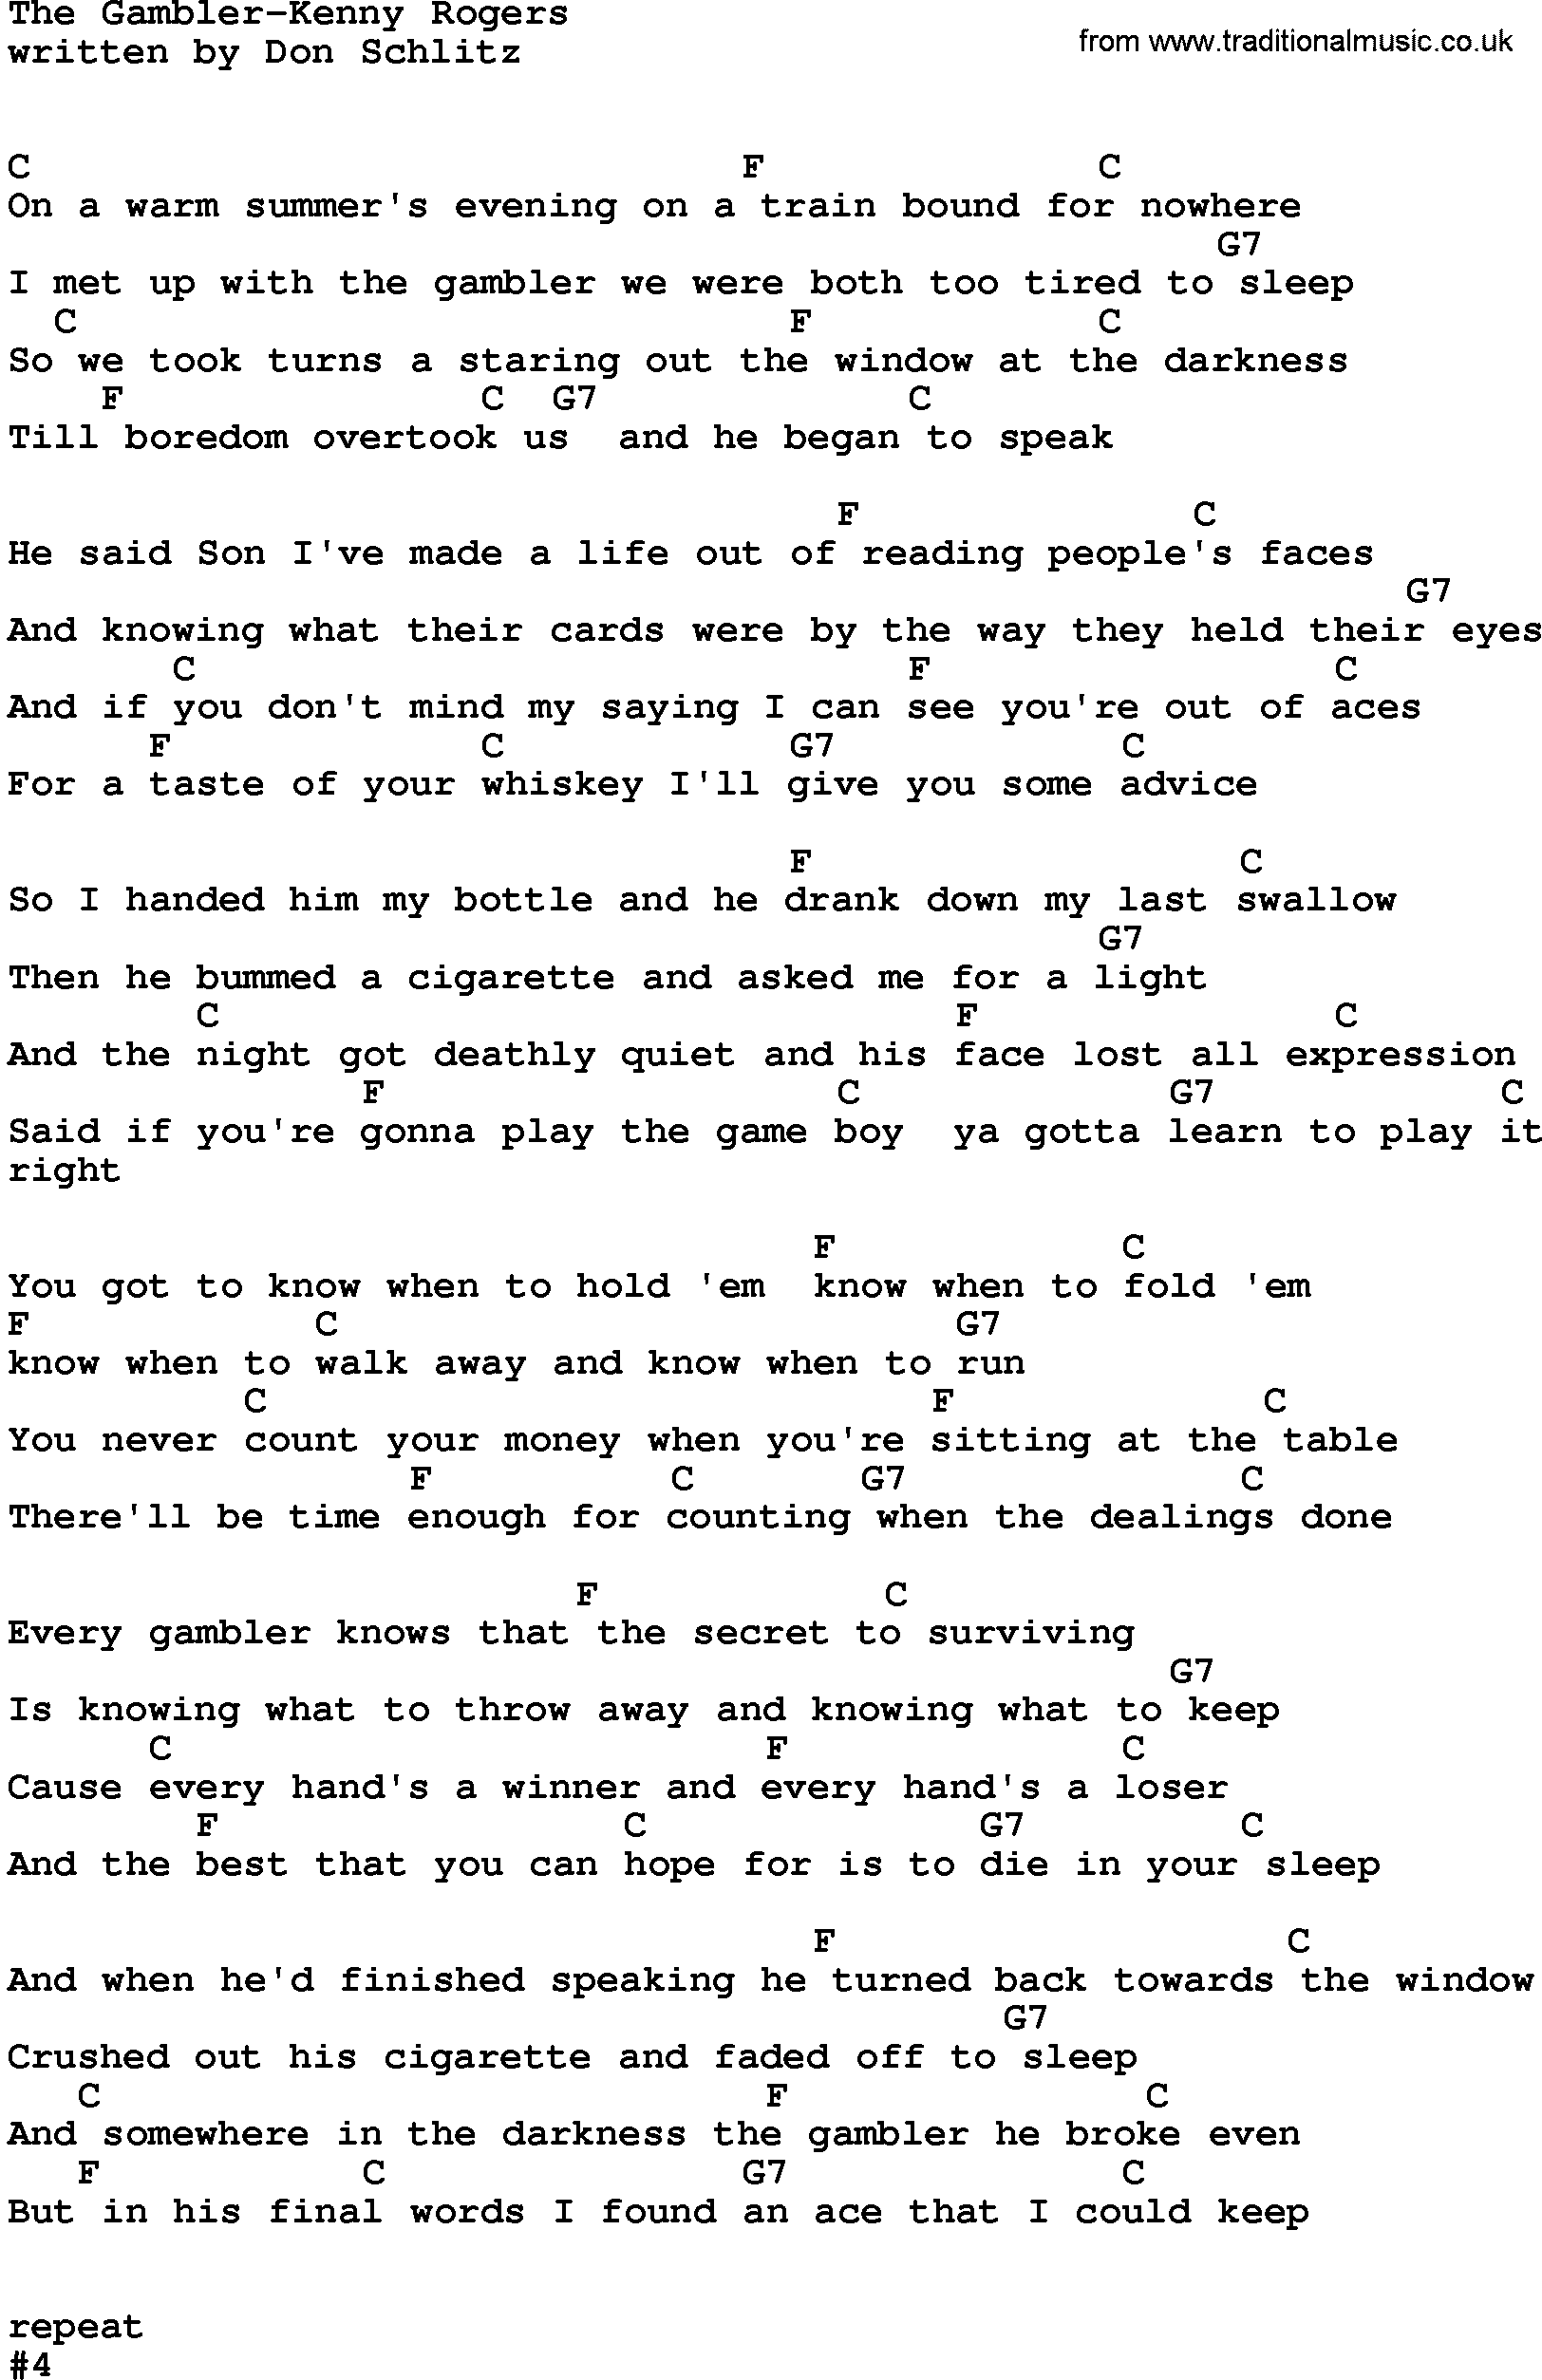 kenny rogers the gambler lyrics meaning